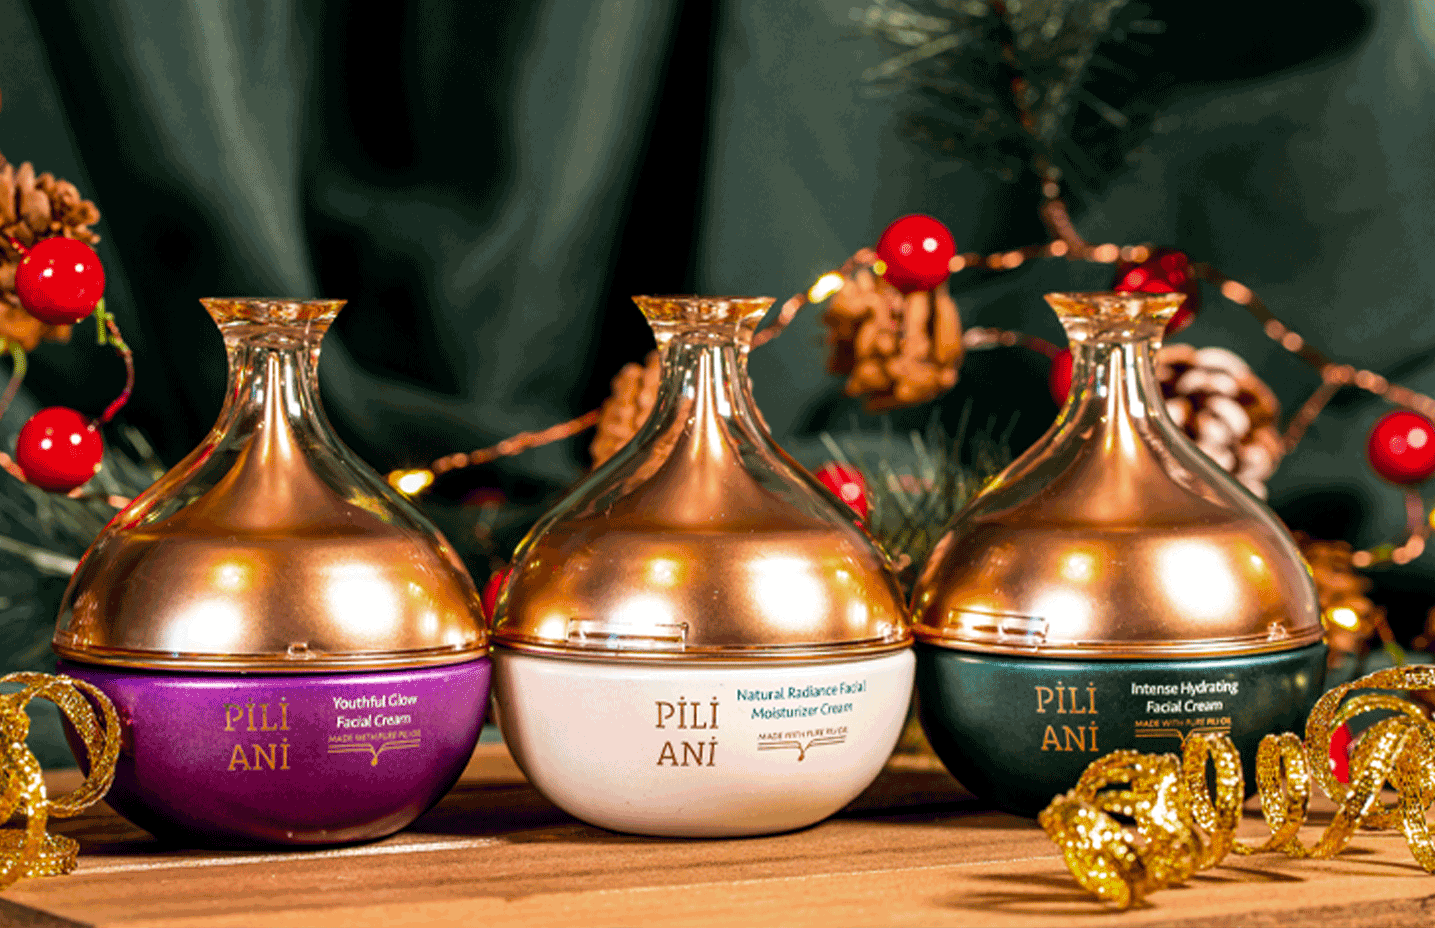 a festive shot of Pili Ani's Moisturizing Creams